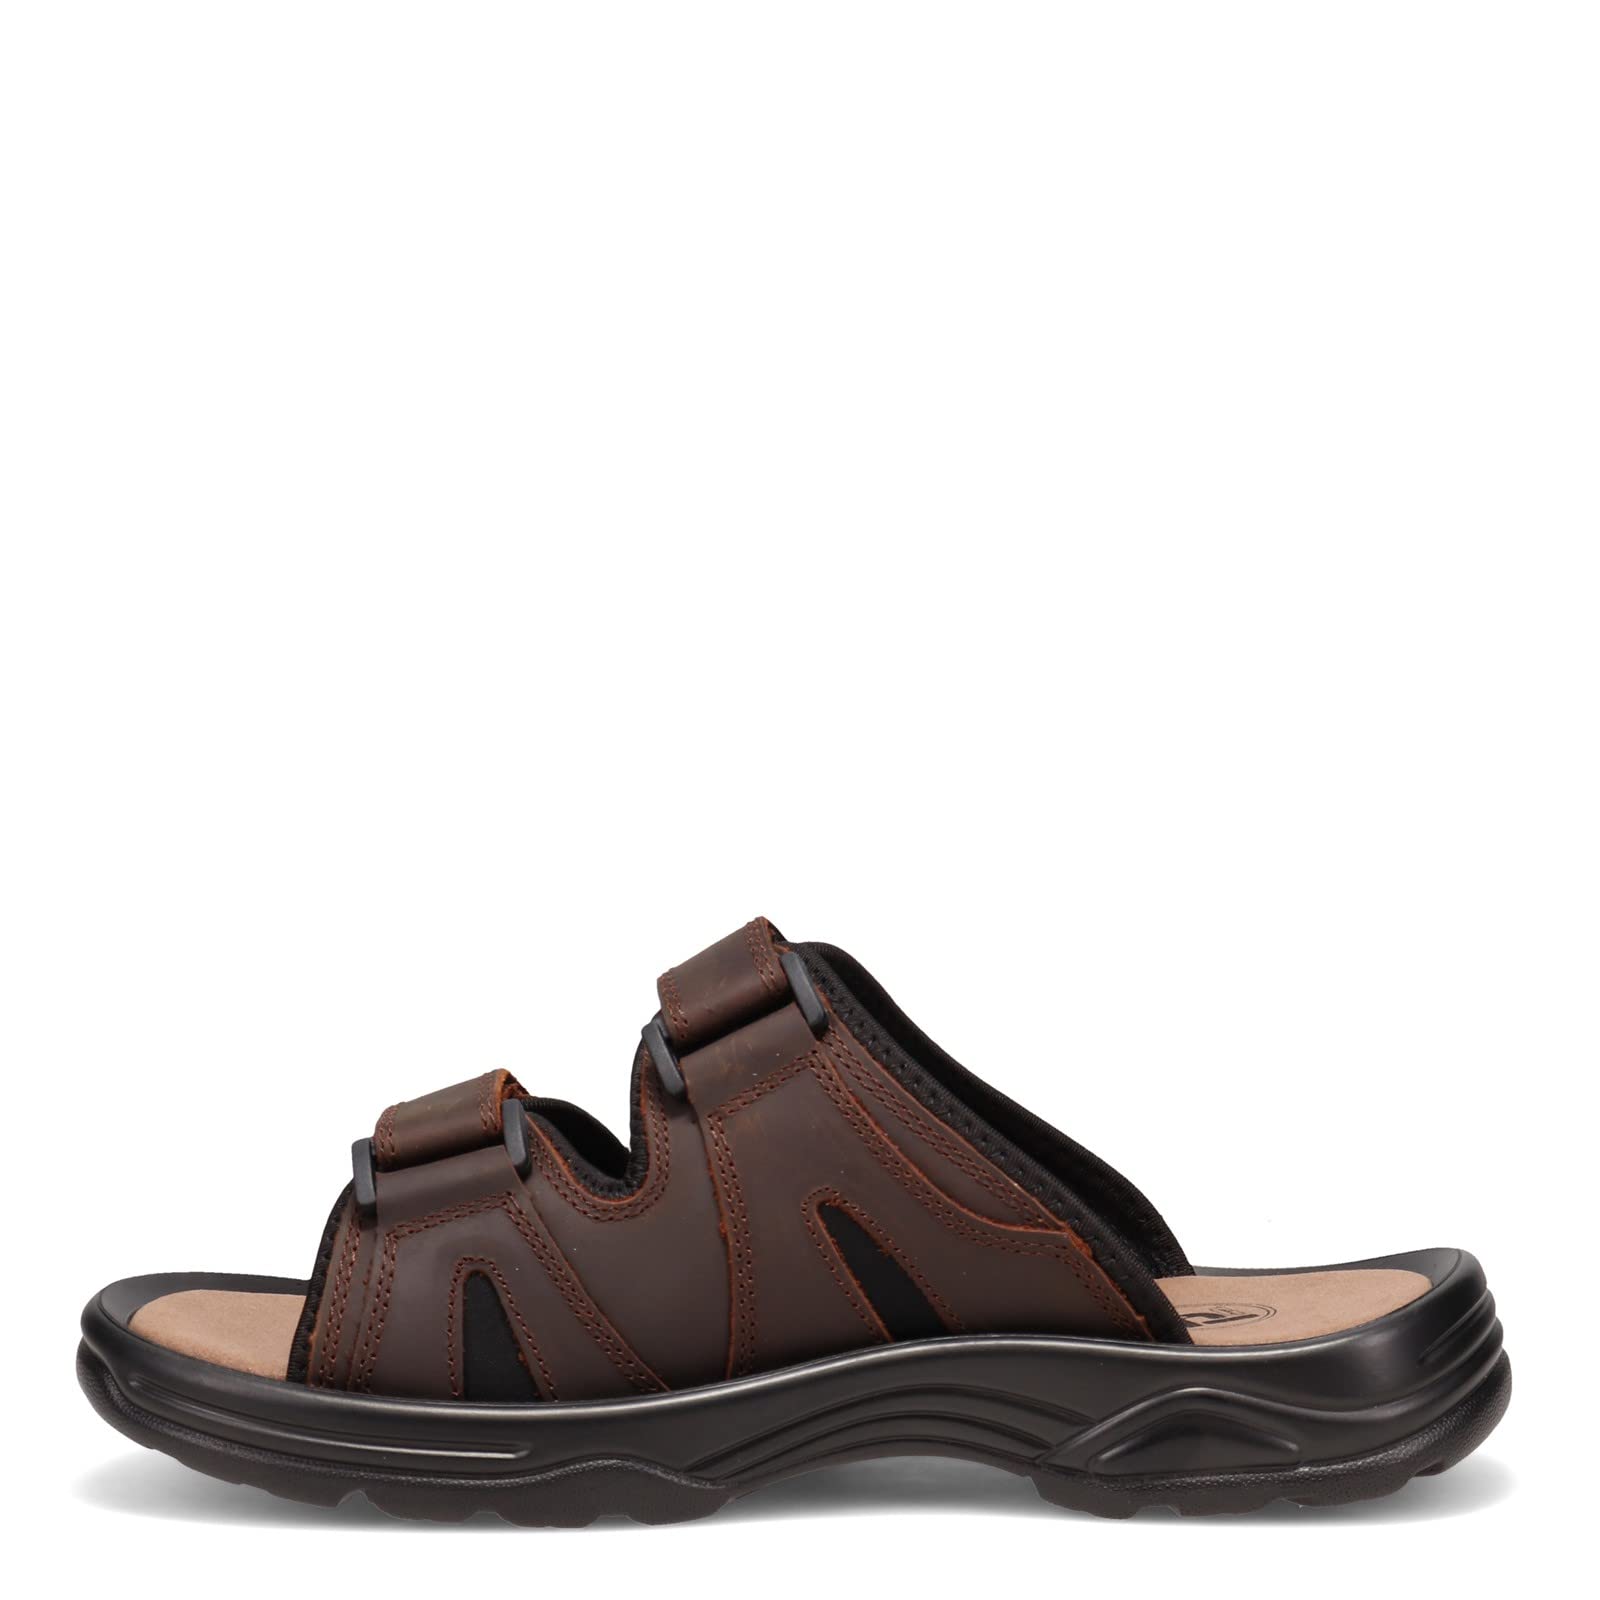 Propét Men's Vero Slide Sandals